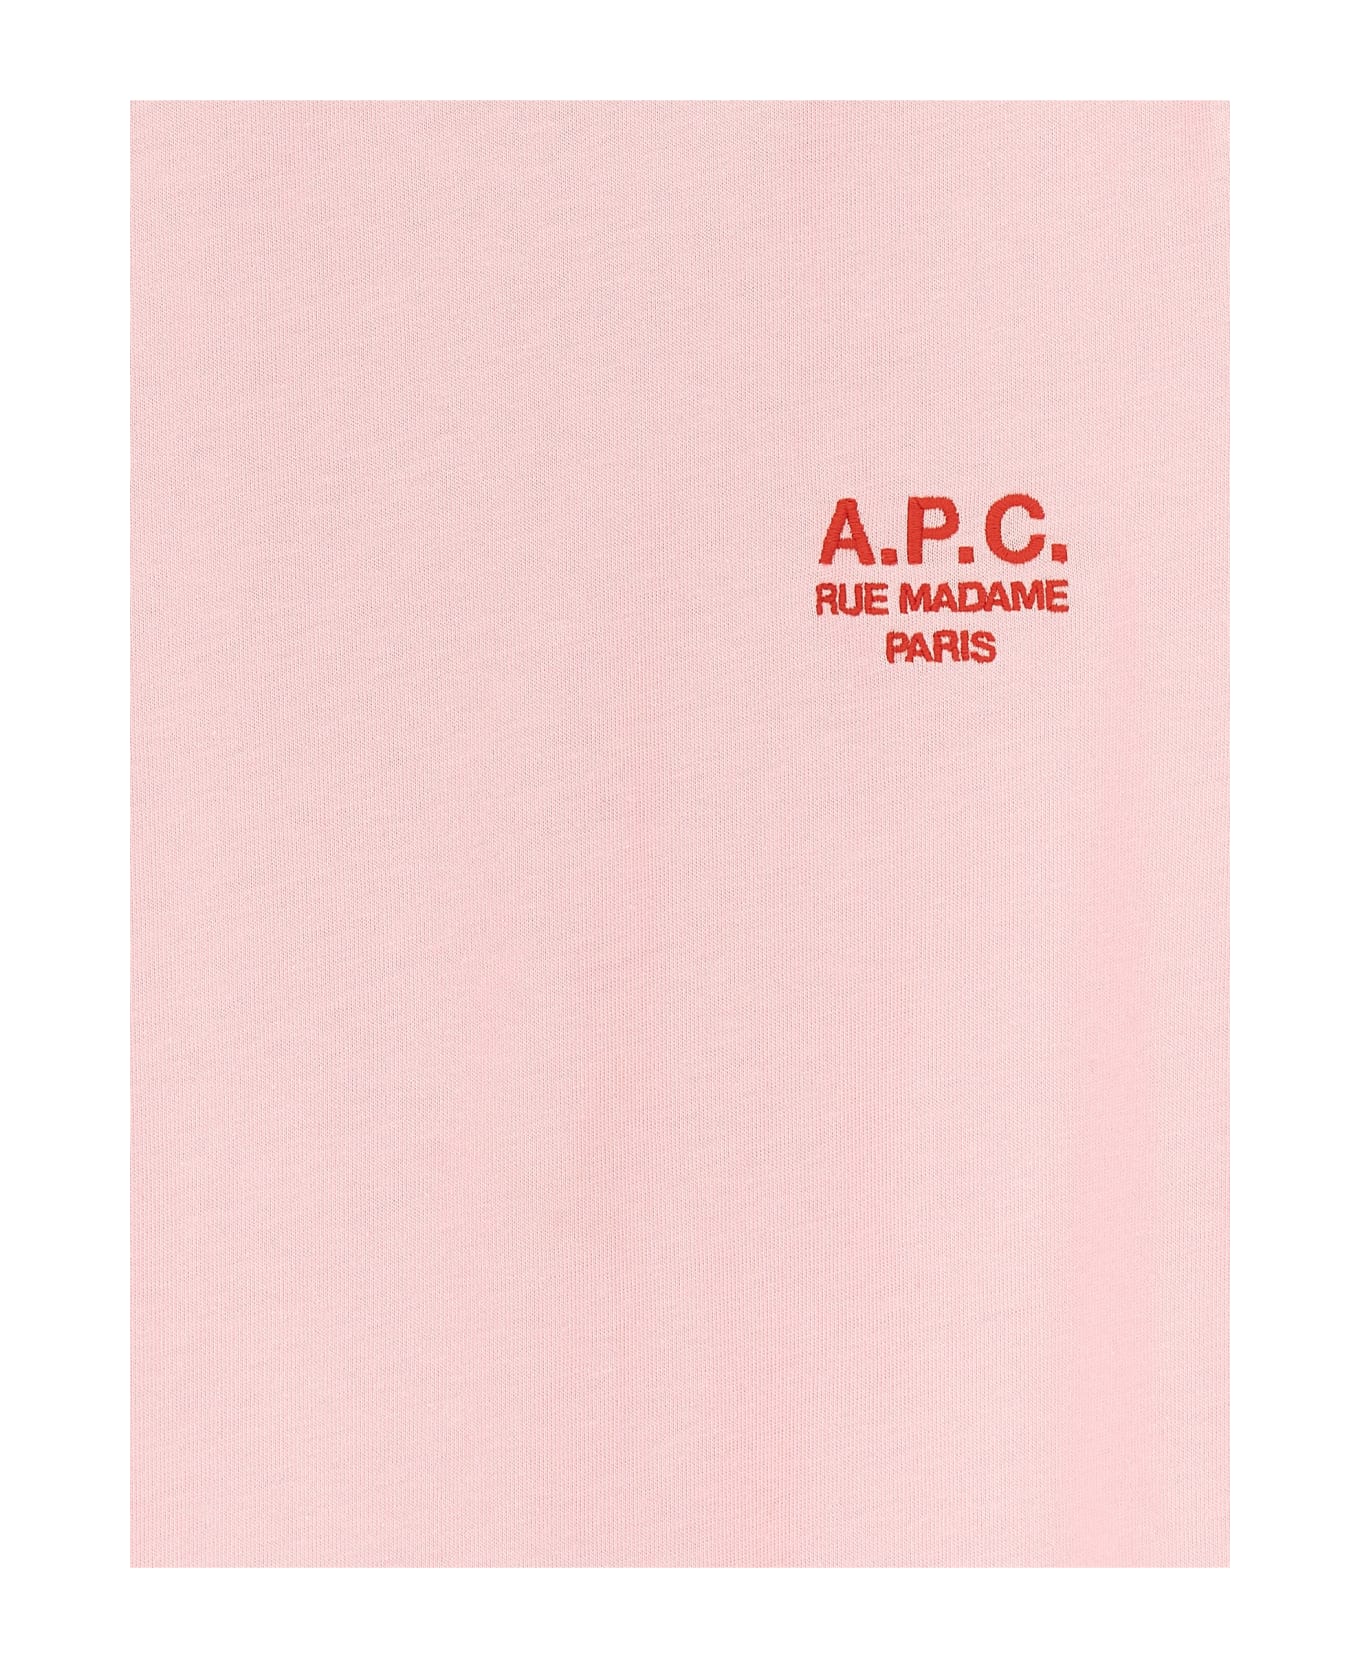 A.P.C. Logo Printed Crewneck T-shirt - Tfe Rose Rouge Tシャツ